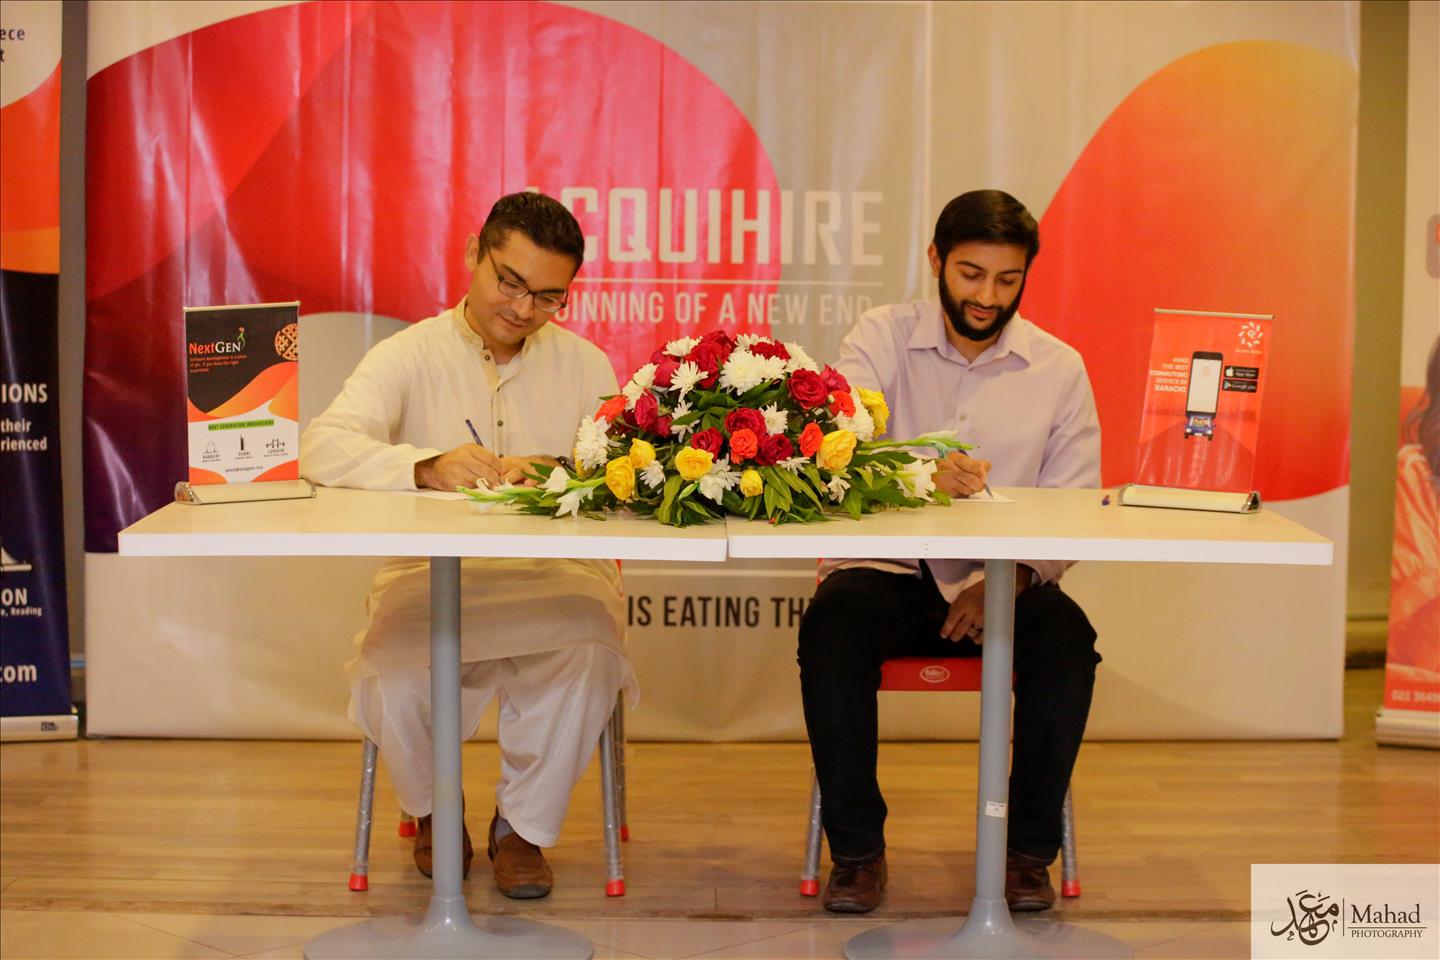 UAE-Based NextGenI Closes an Acquihire deal with Pakistani Startup Roshni Rides